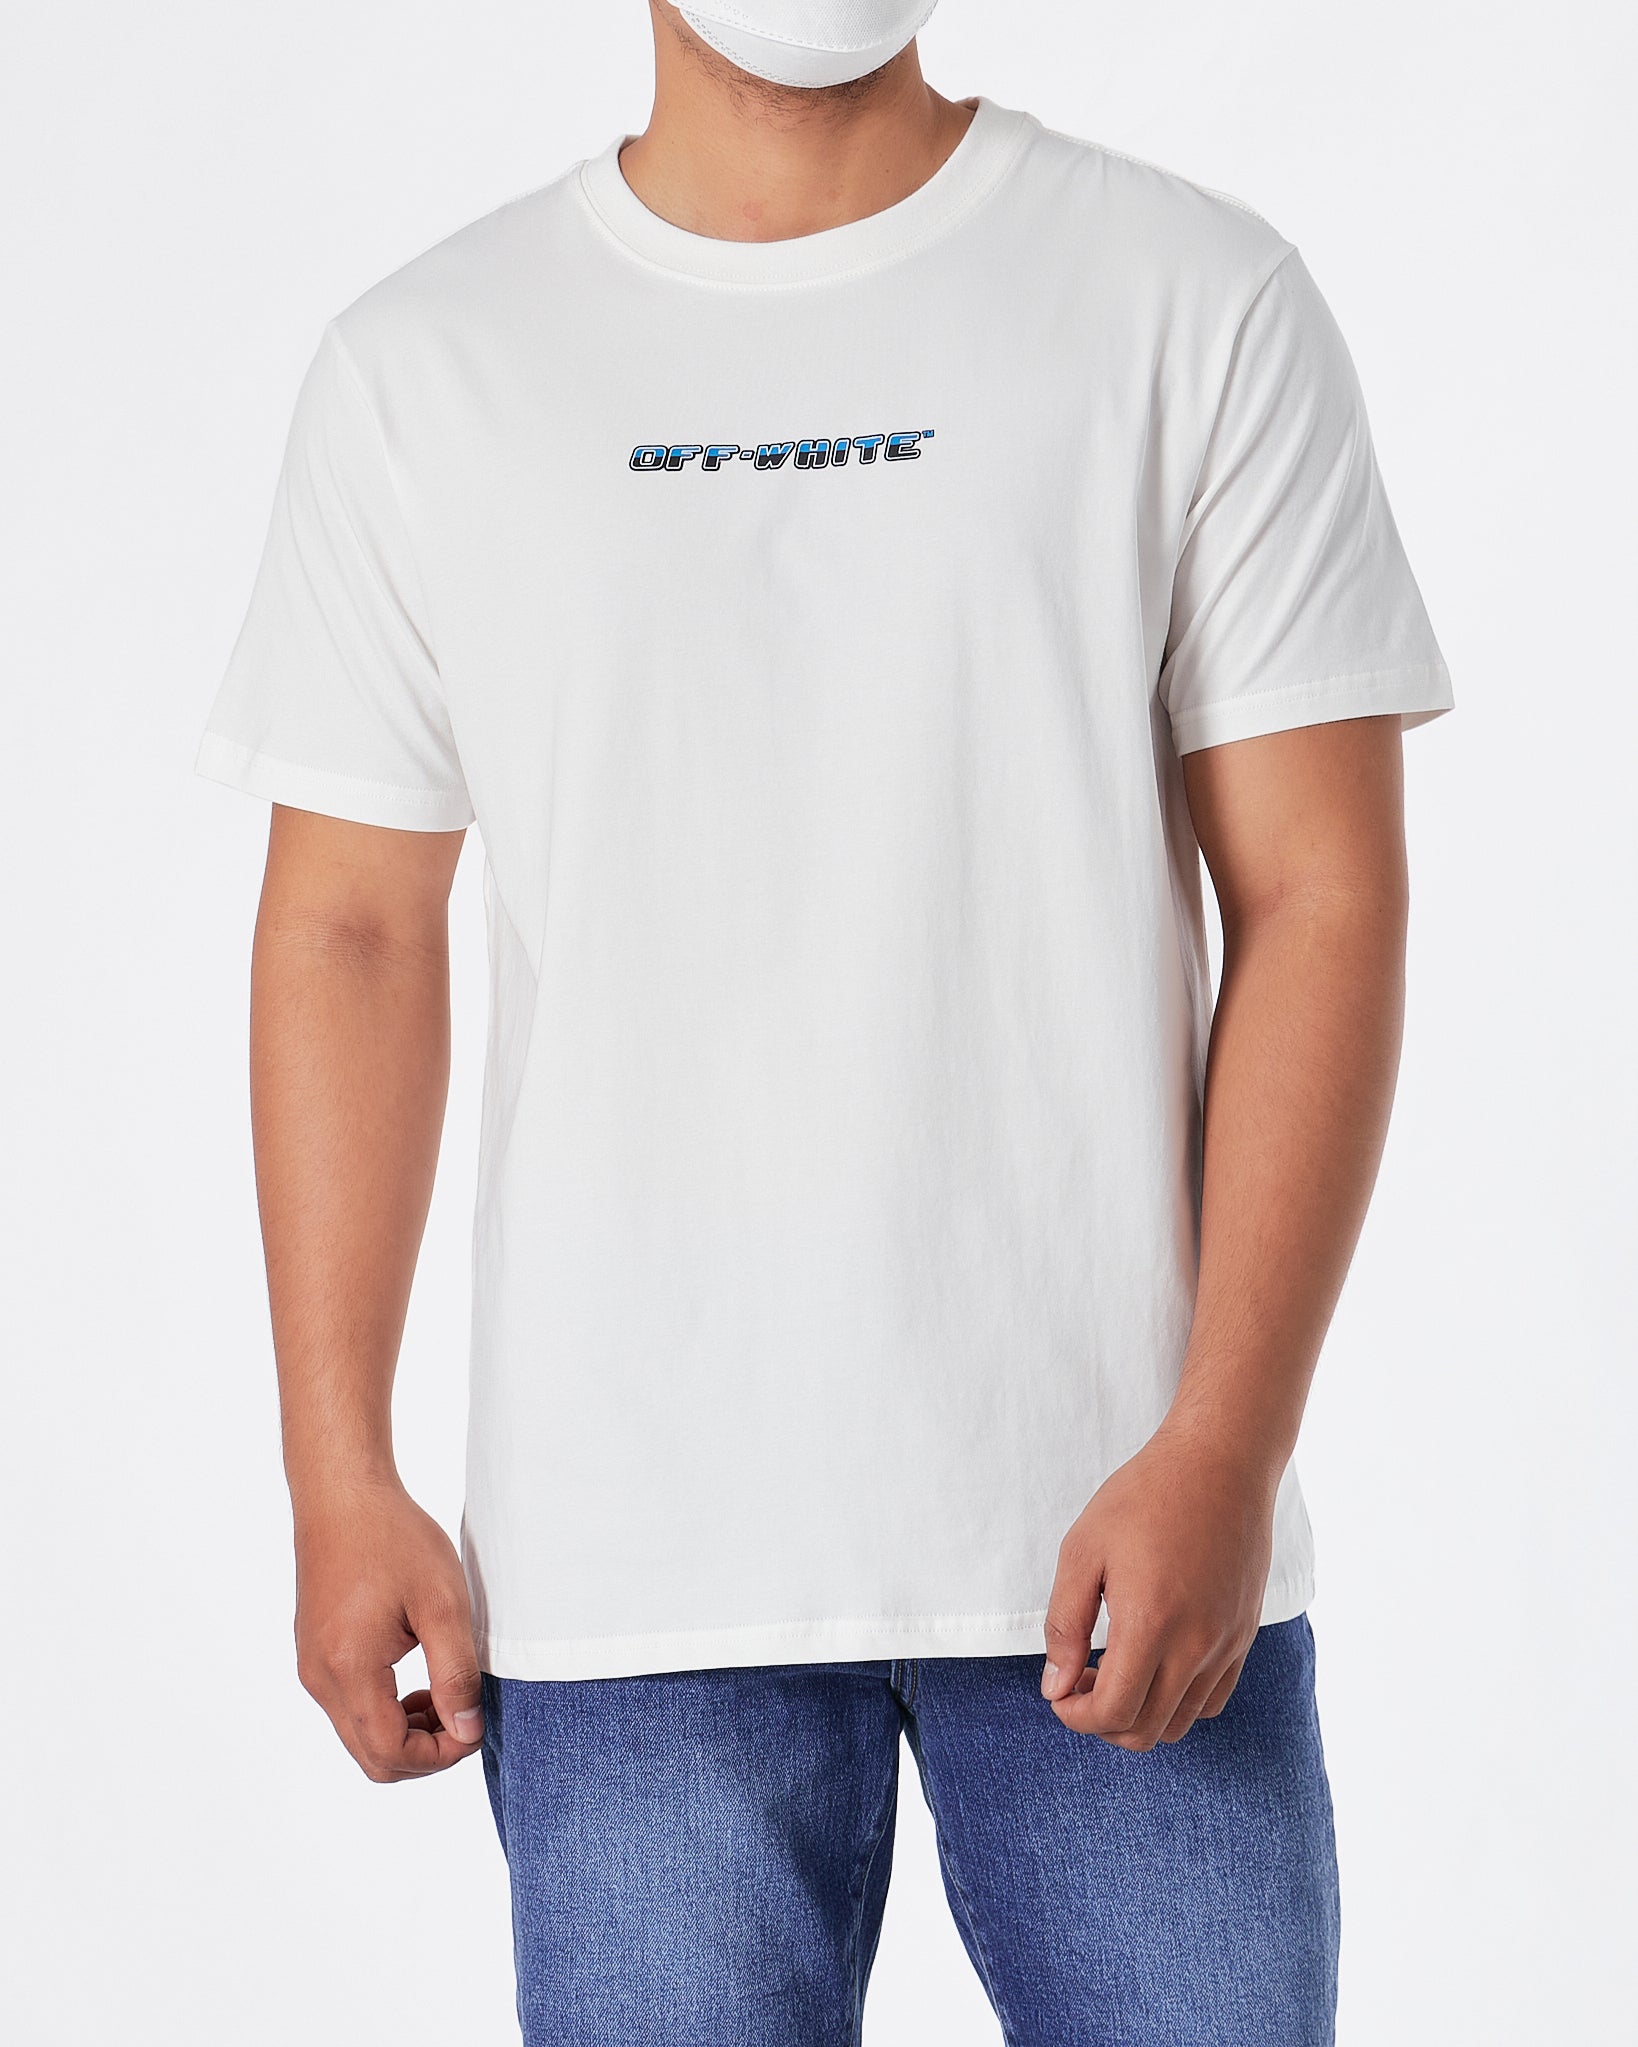 OW Cross Arrow Back Printed Men White T-Shirt 19.90